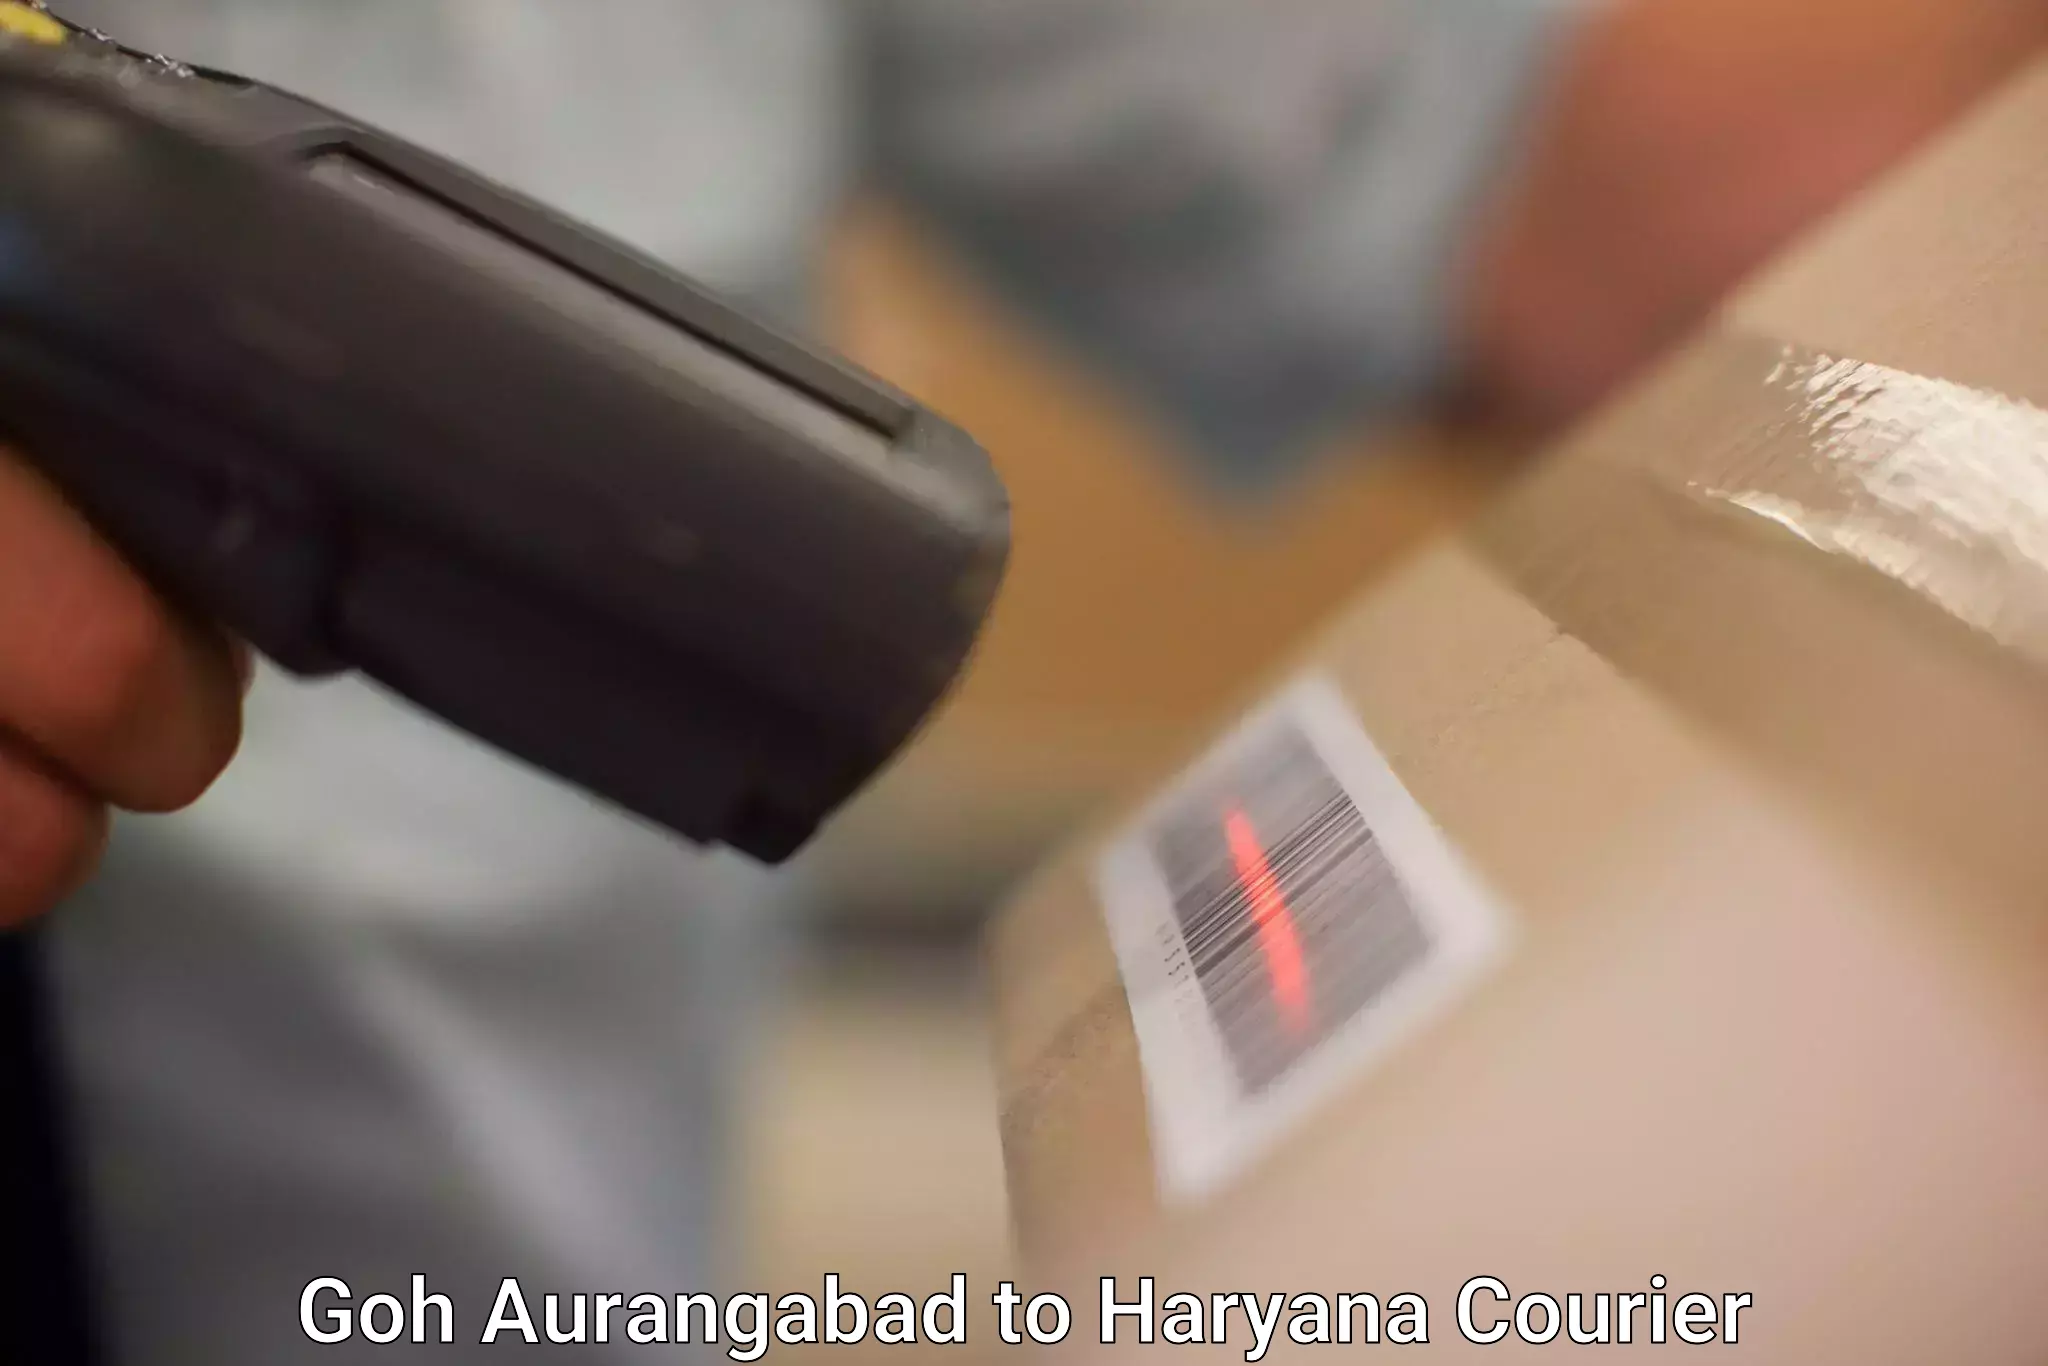 Courier service booking Goh Aurangabad to Haryana